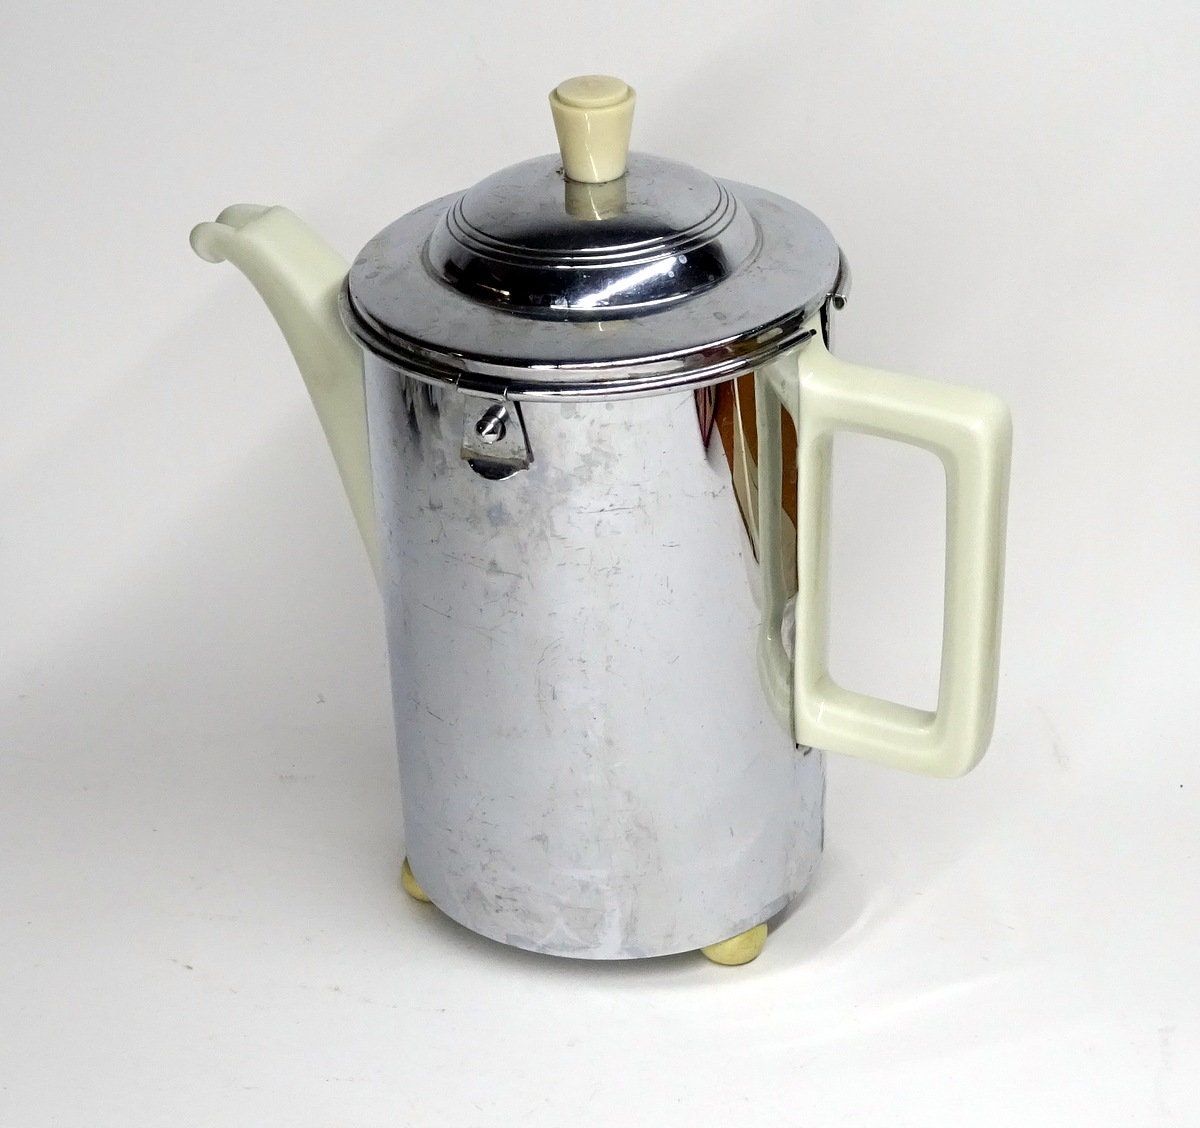 Art Deco Ball Thermal Teapot, Bauscher D.R.P. With Chrome Thermal Cover,  1930s, Pre-war Version Metal, Bauhaus, Felt Insulation, Vintage 